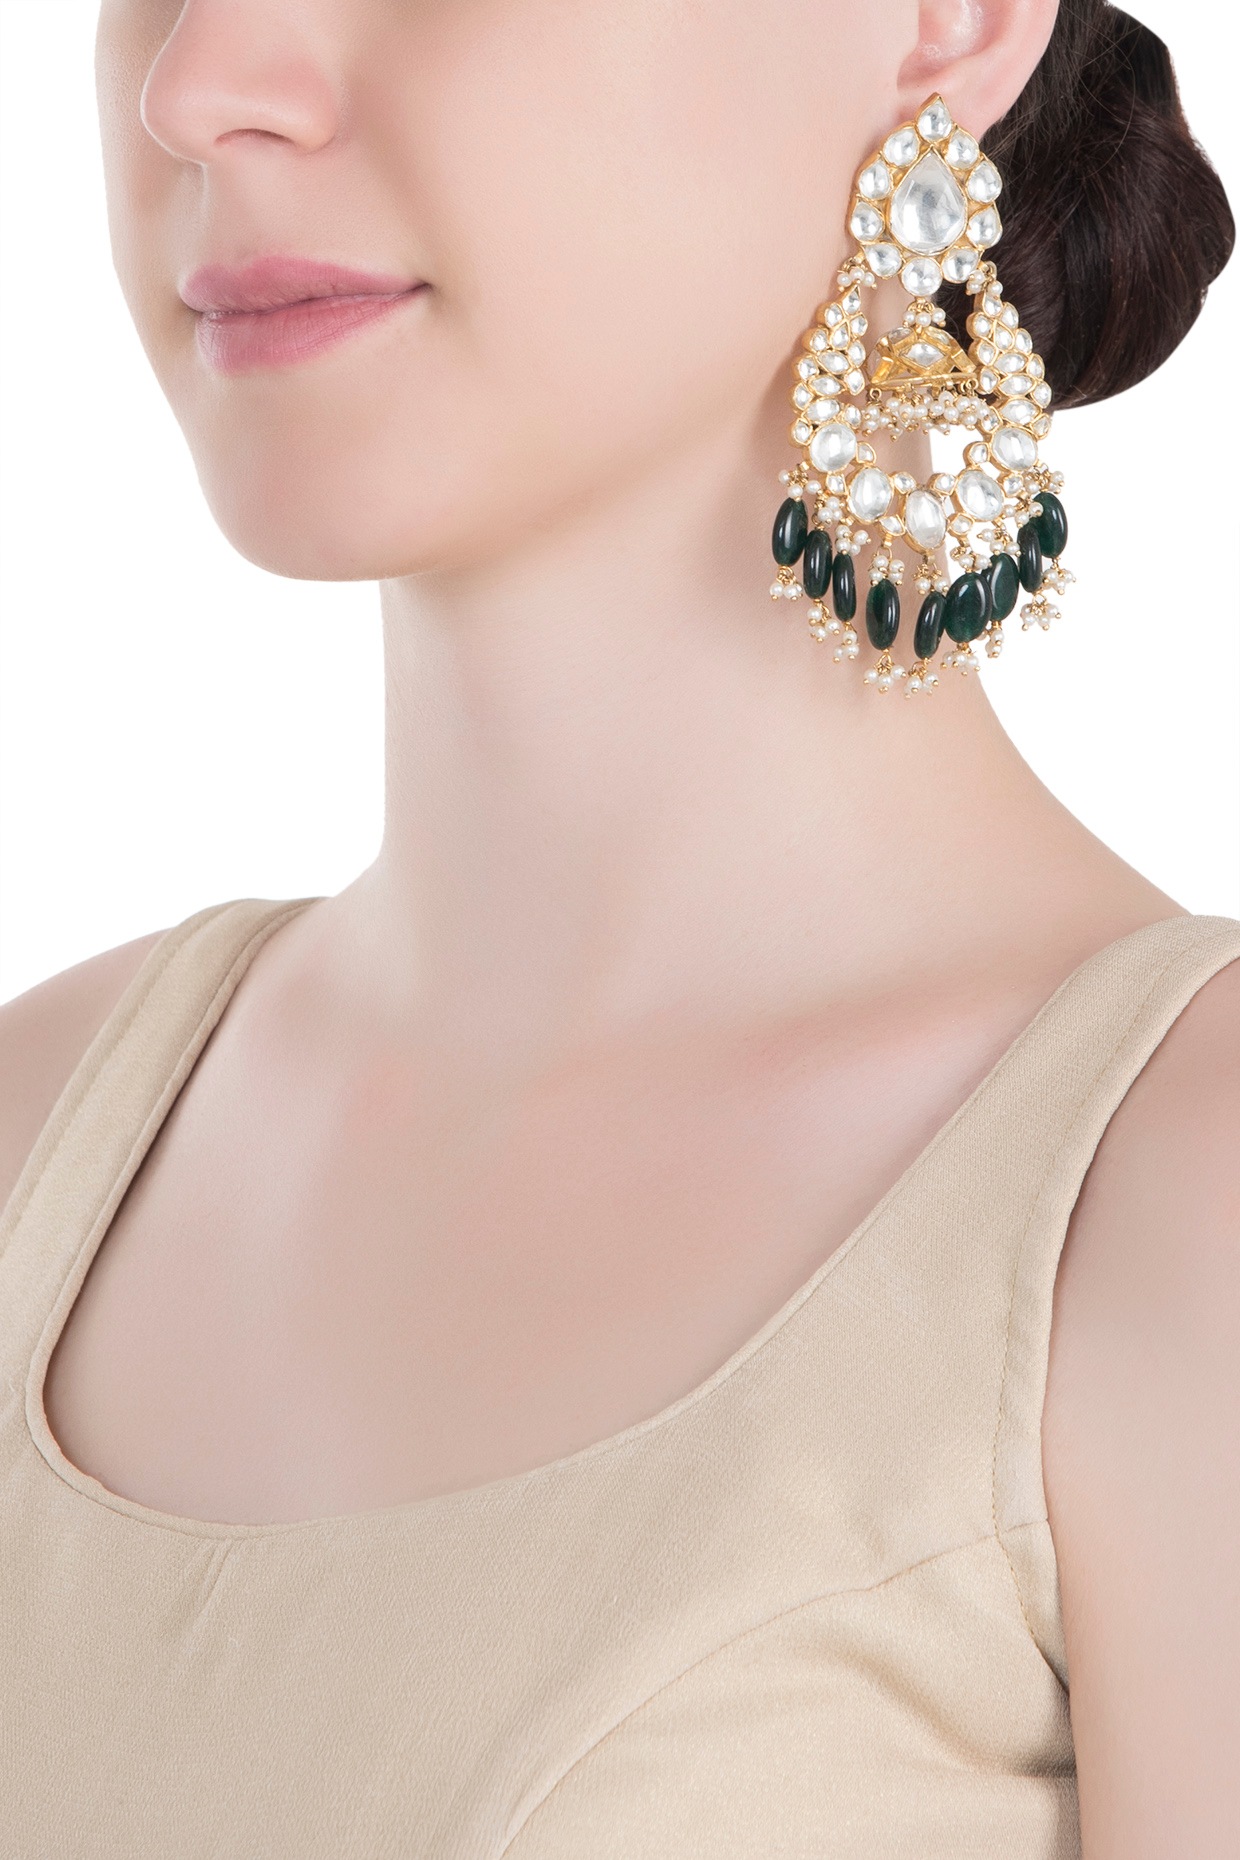 Jhumka Earrings| Jhumki Earrings, Traditional Jhumkas, Earrings